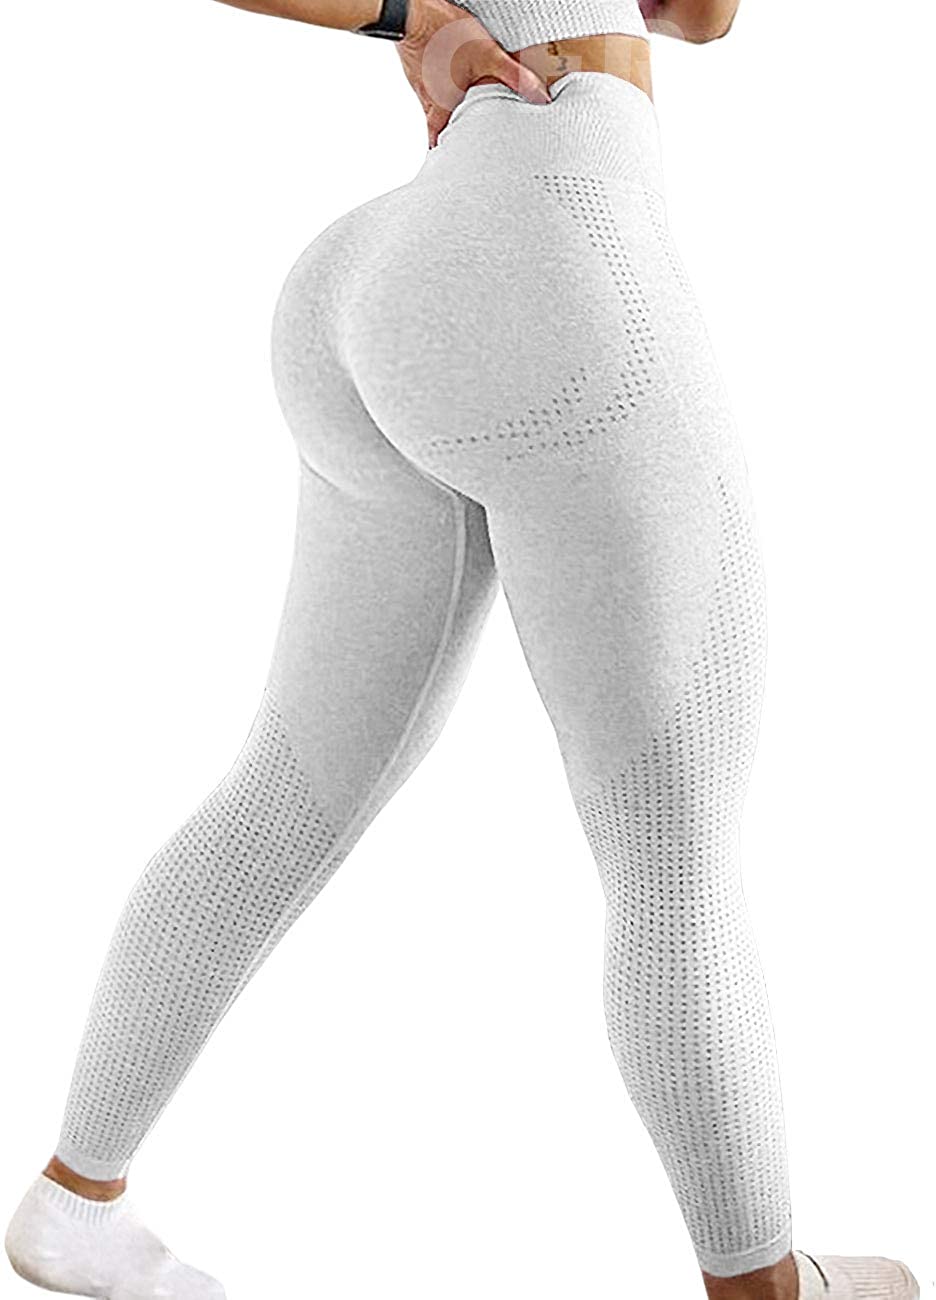 CFR Women's Workout Shorts Seamless Scrunch Butt Lifting Squat Proof Sport  Yoga Hot Pants A-Ruched Booty Black,M